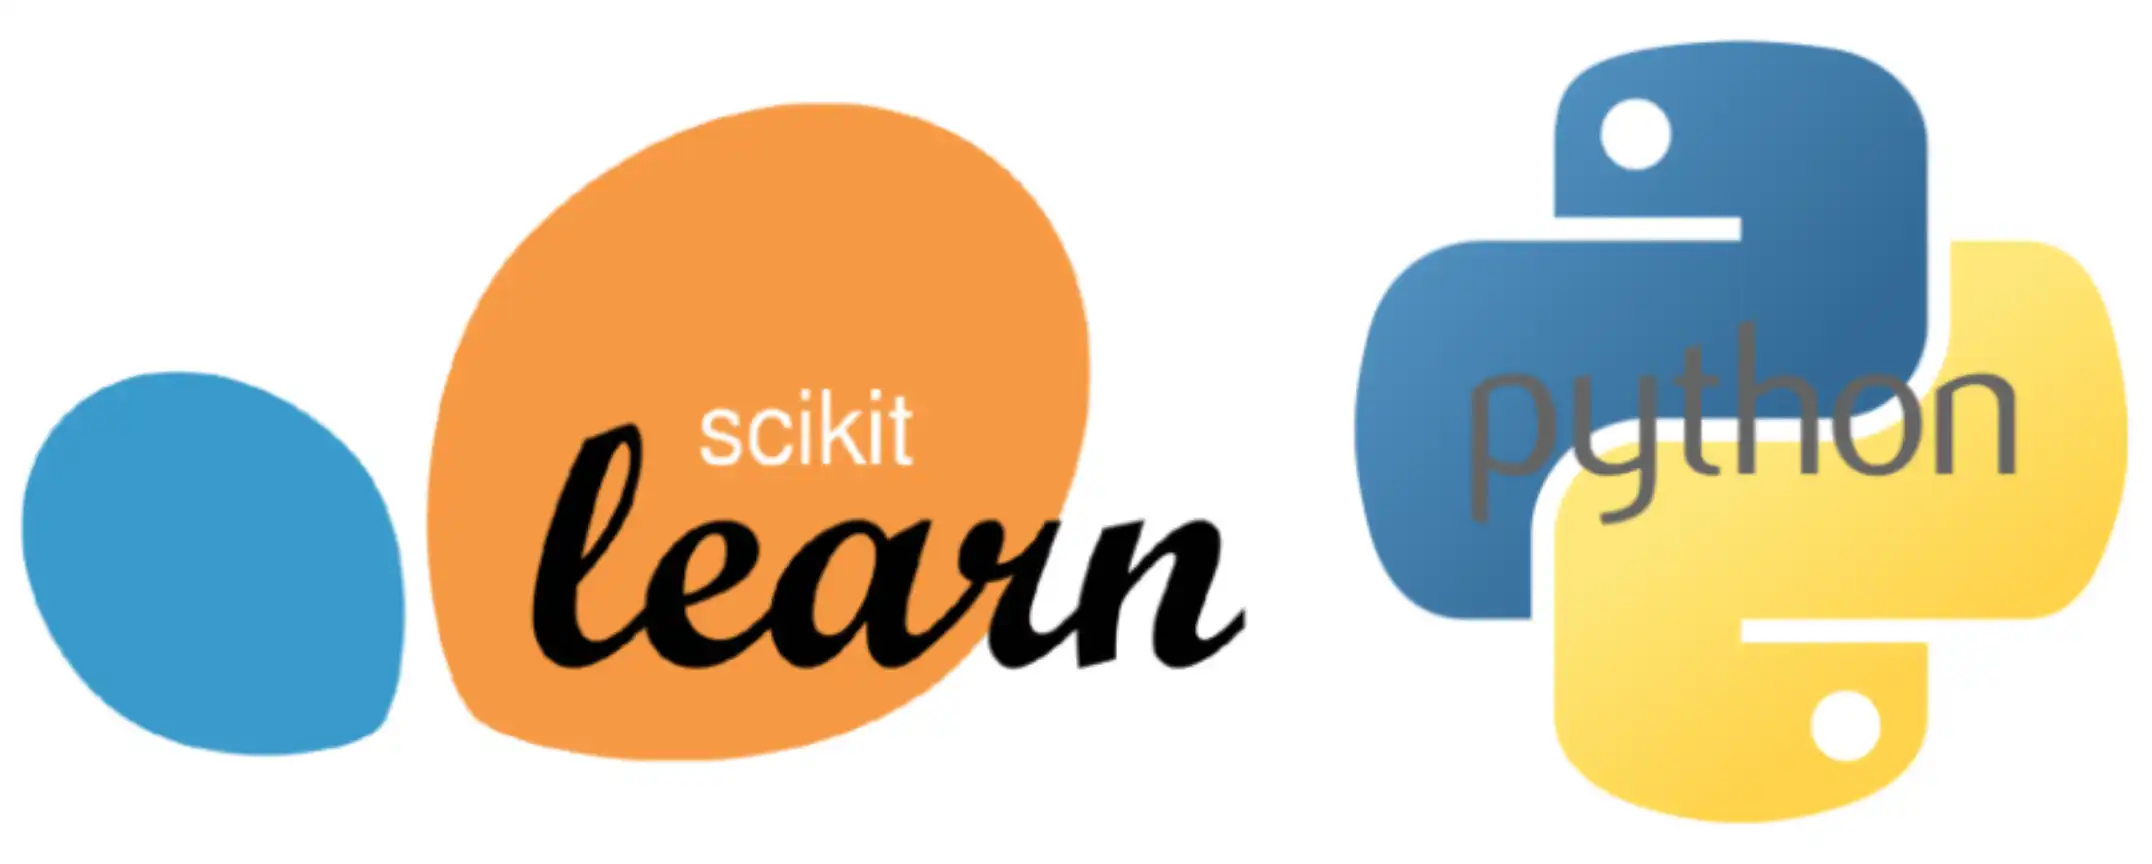 scikit learn sklearn machine learning künstliche intelligenz neuronale netze weiterbildung wien training